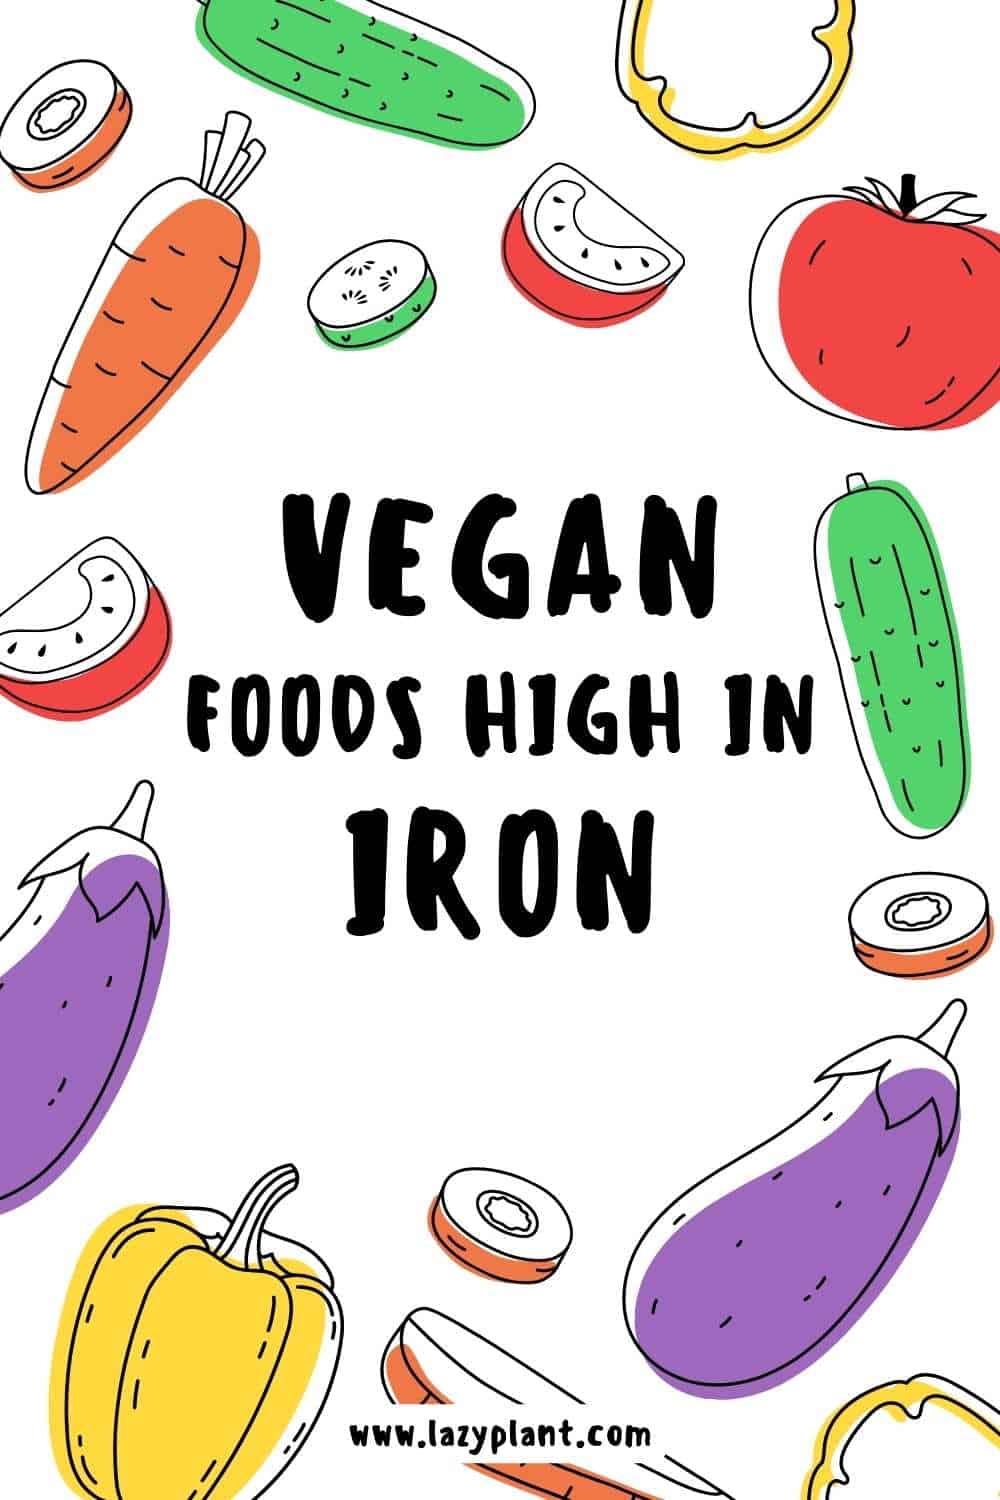 Vegan foods naturally high in iron!